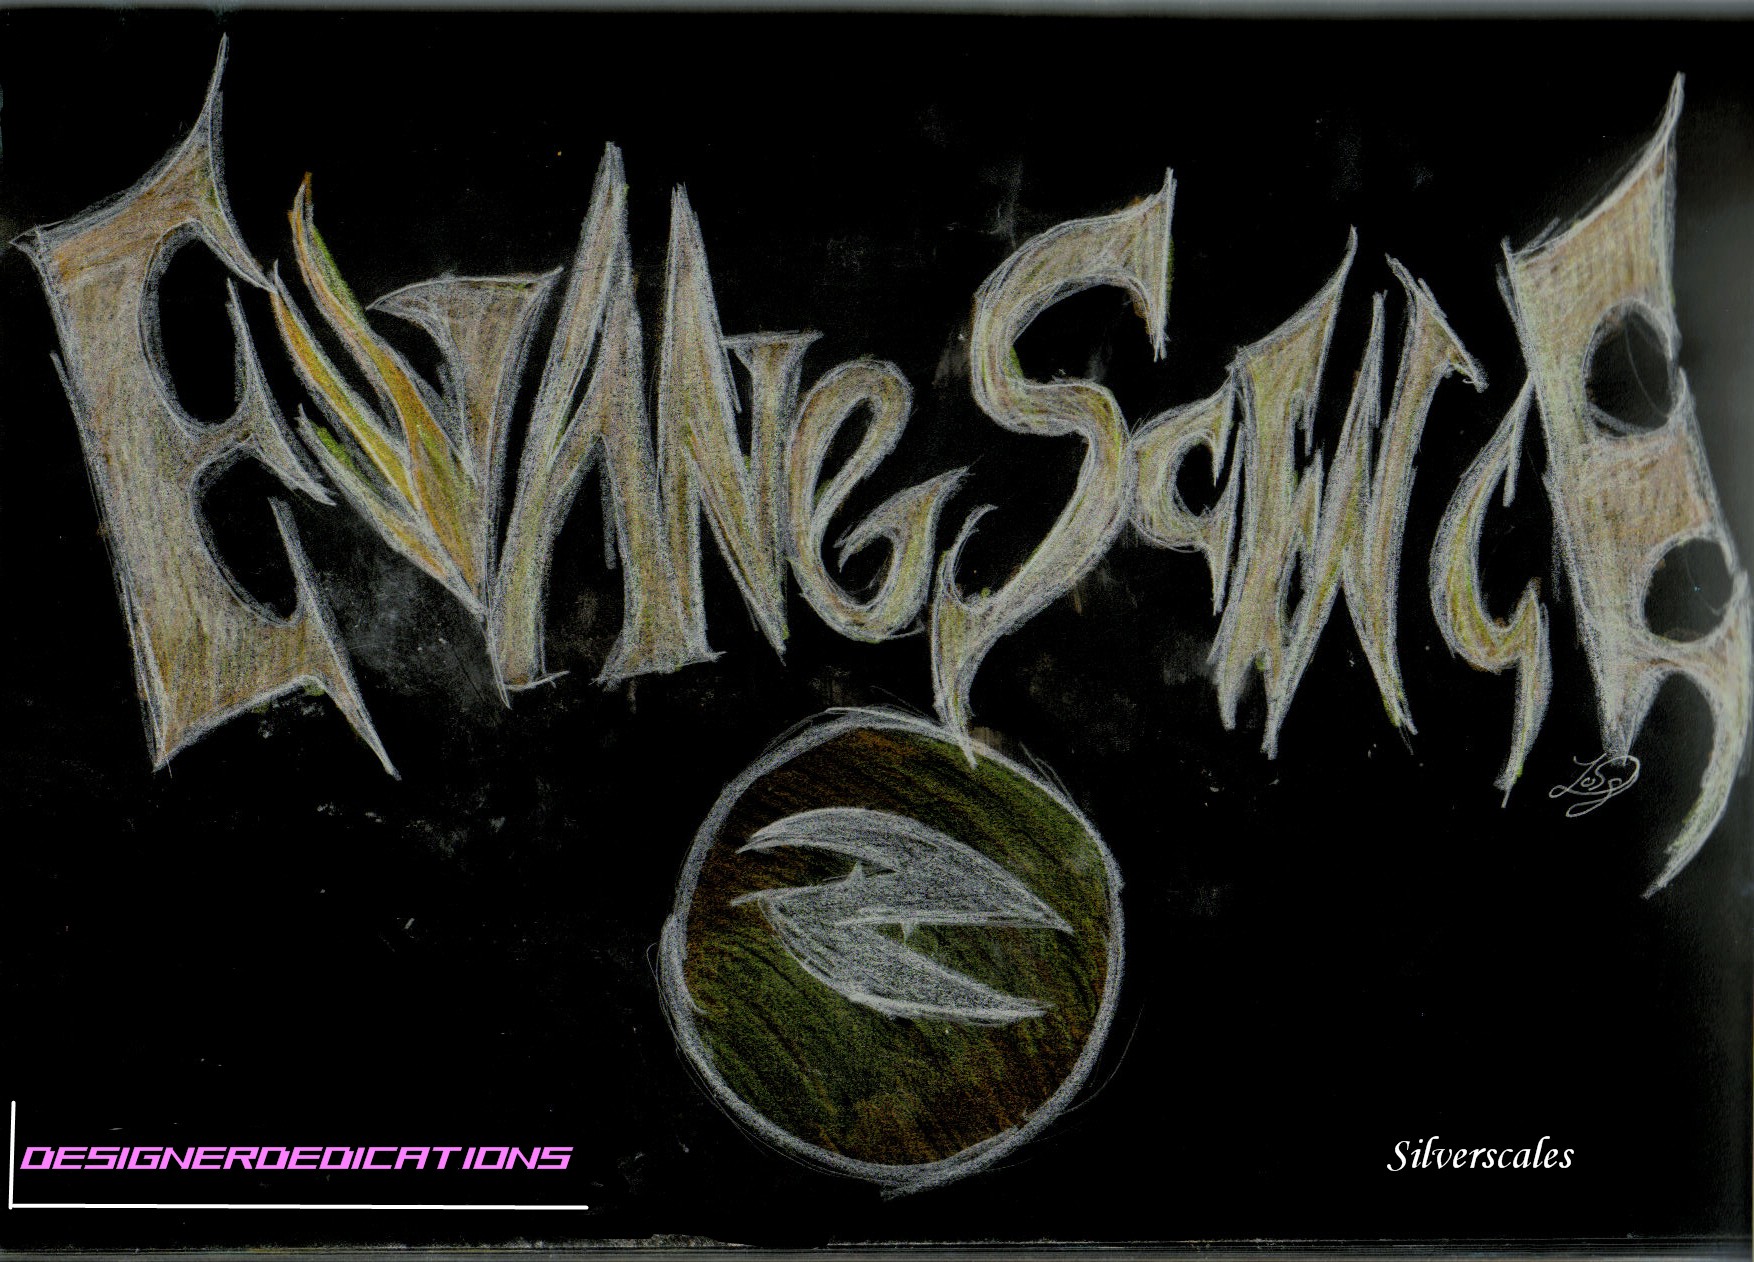 Evanescence DD neggi by Silverscales